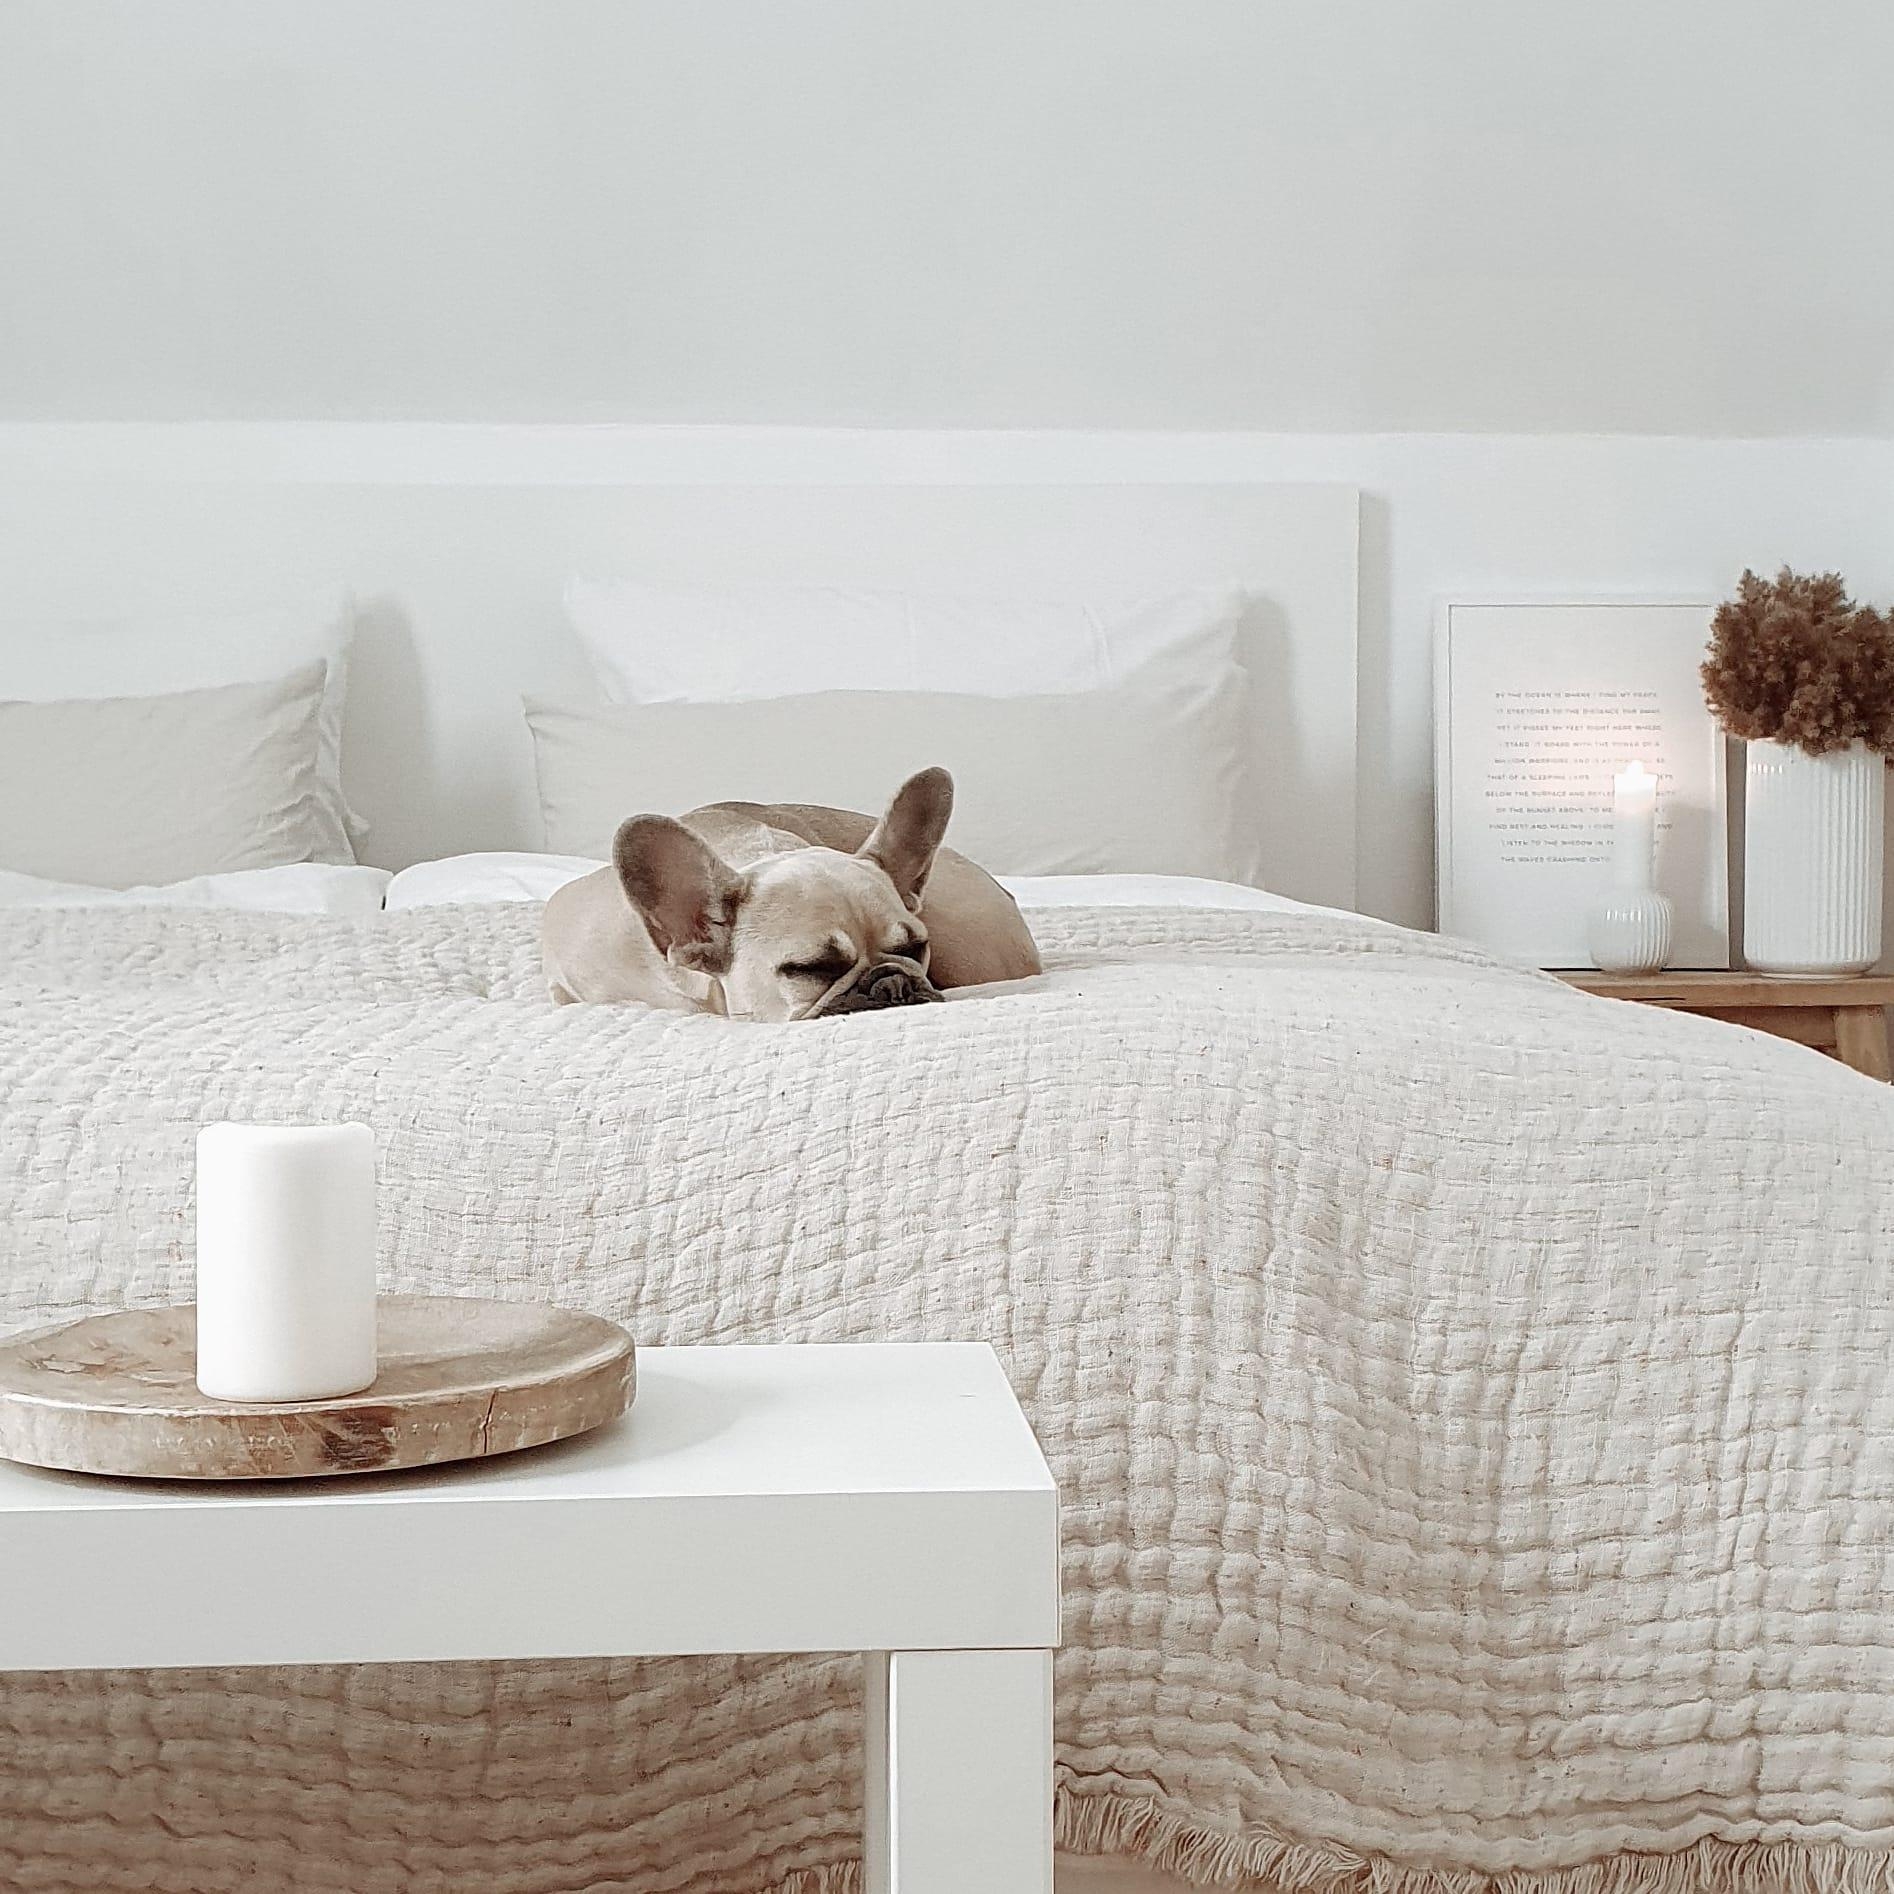 #schlafzimmer #bedroom #weiss #white #holz #frenchie #bulldog #nature #skandistyle #skandi